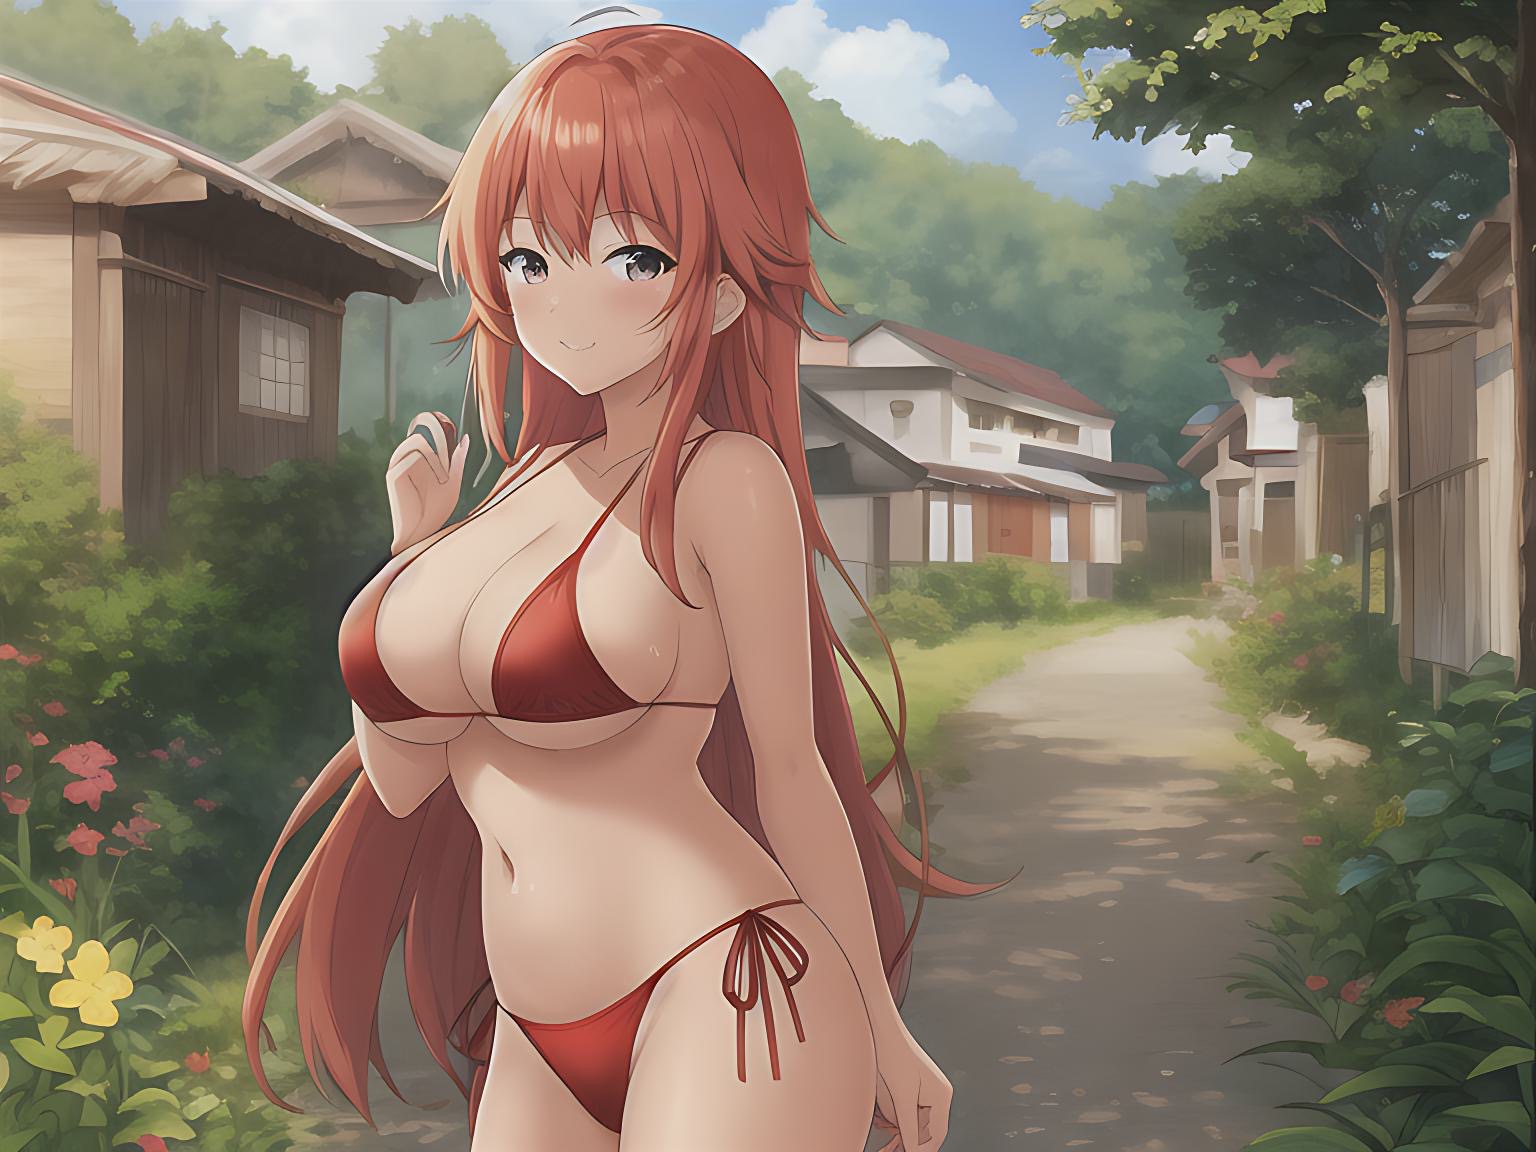 A candid image of Anime girl Hayunai